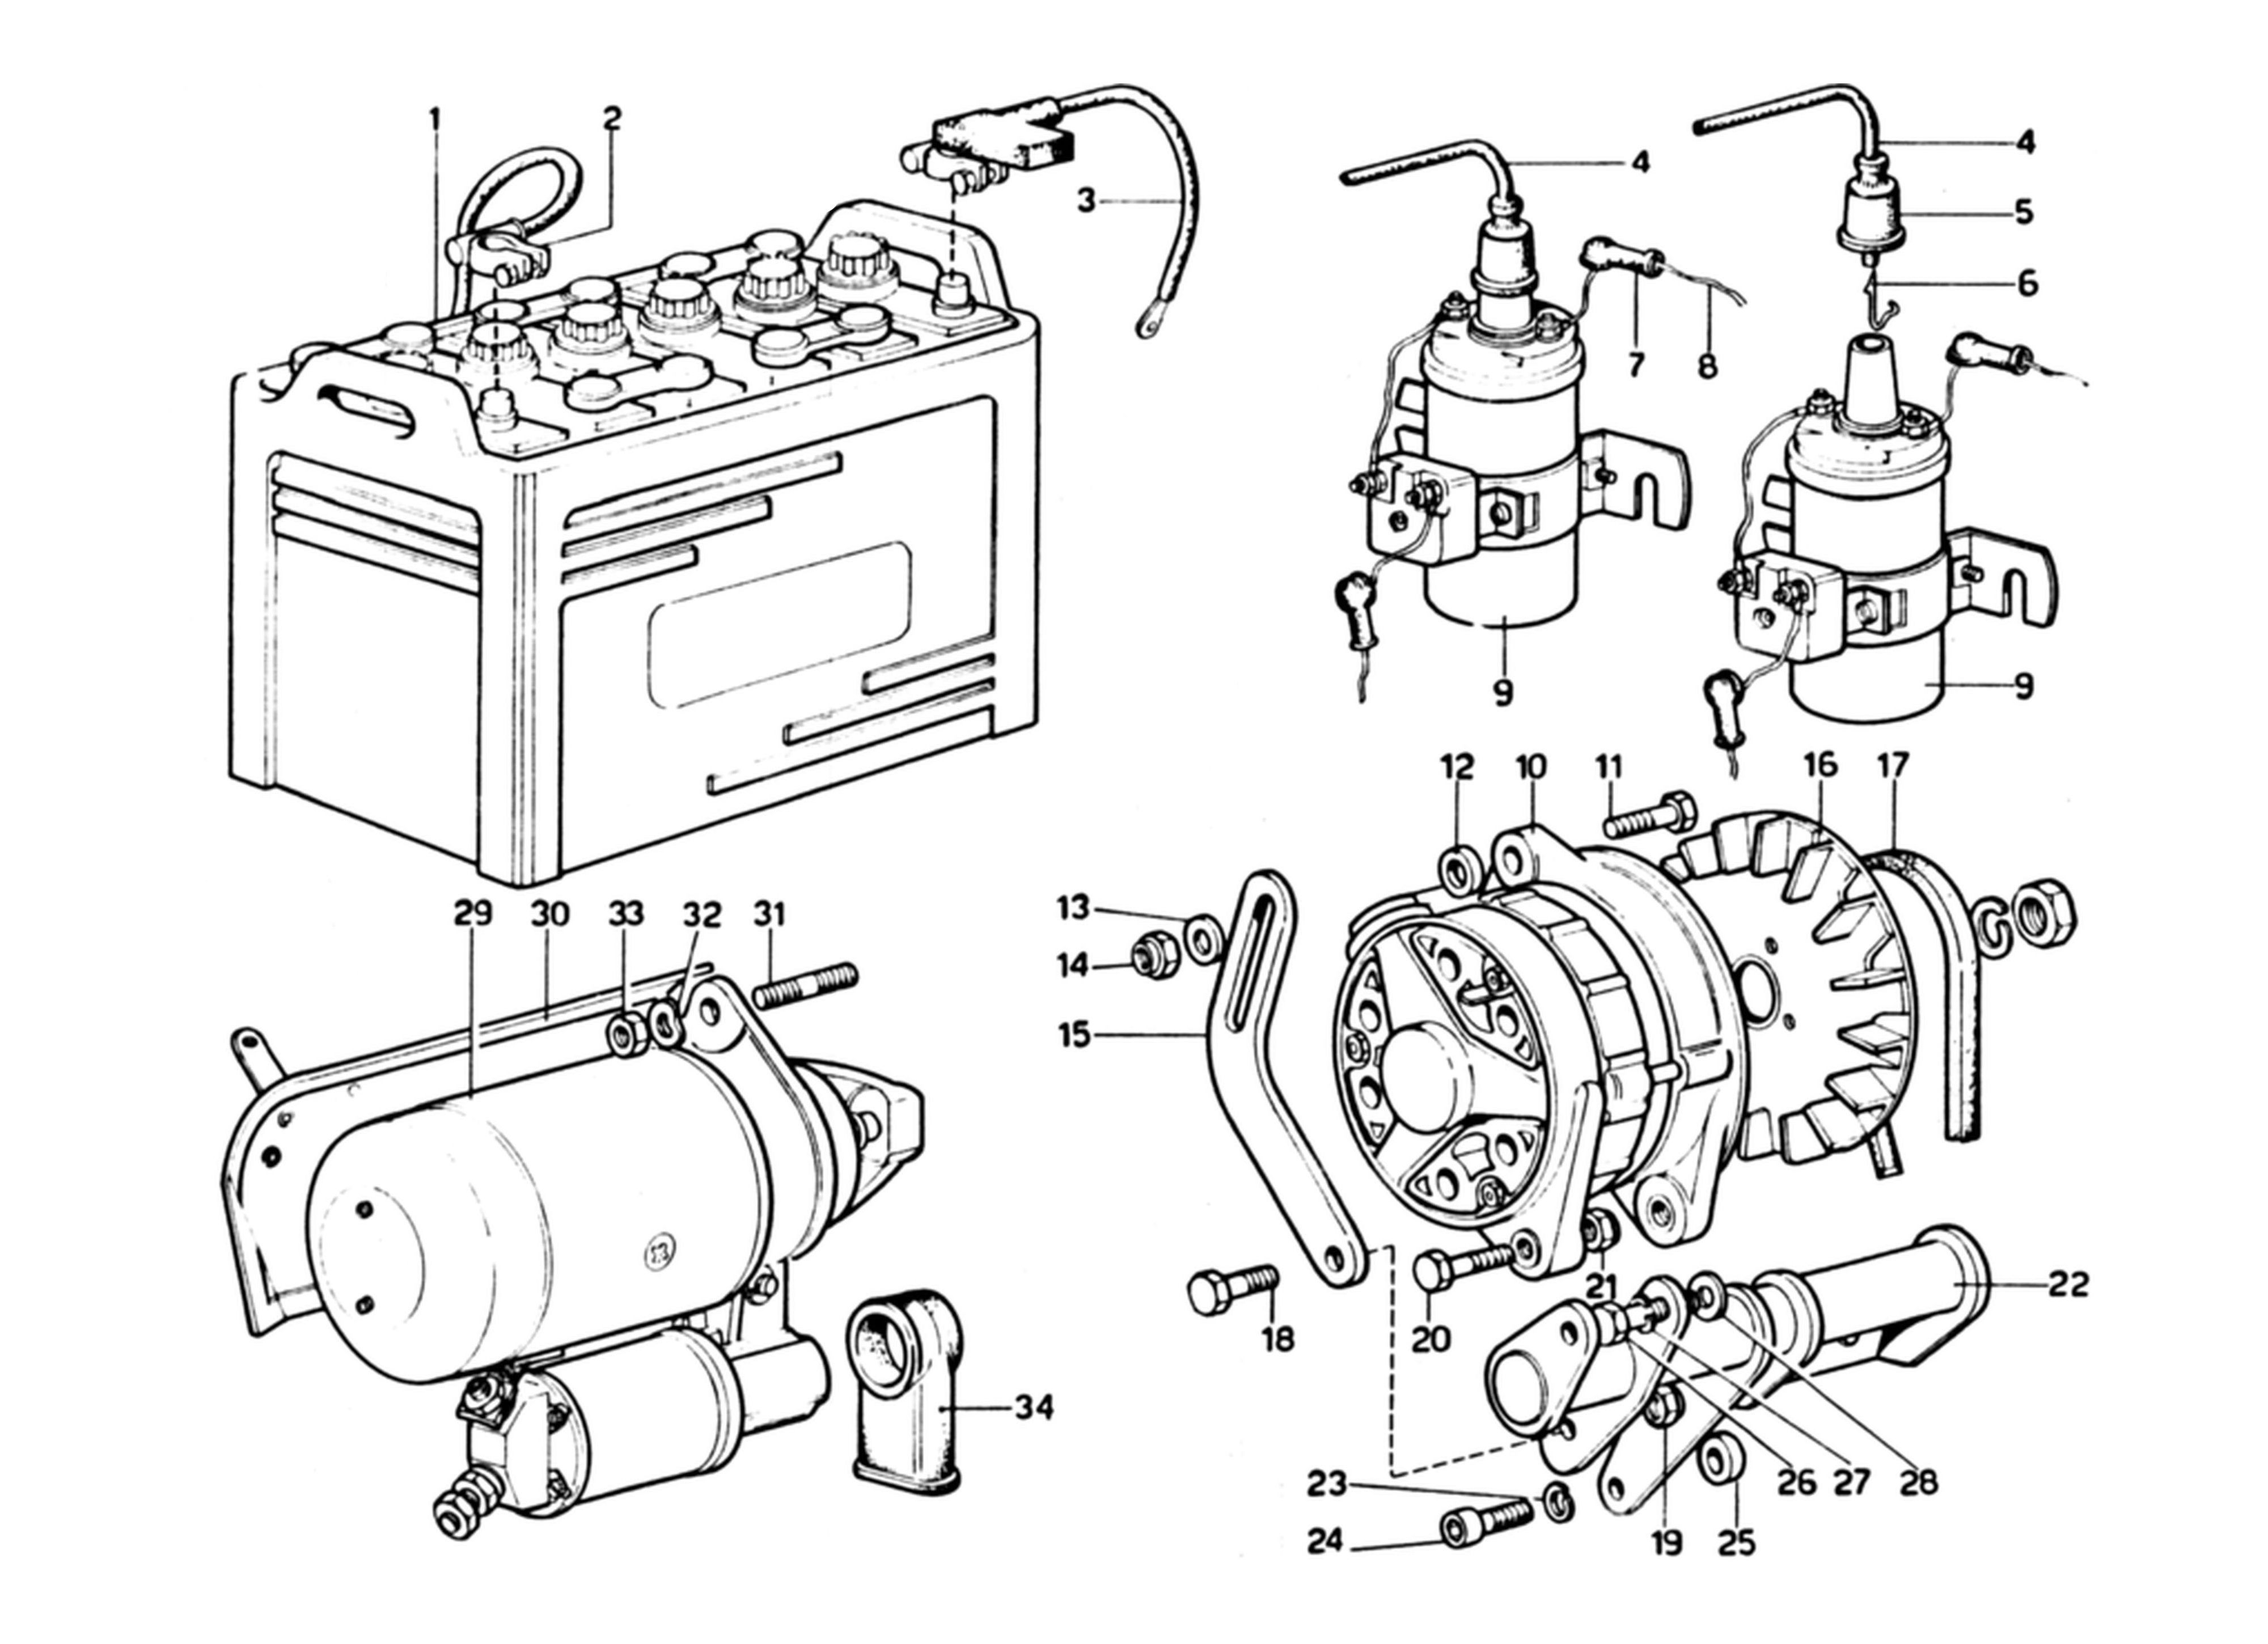 Schematic: Generator, Accumulator Coils & Starter